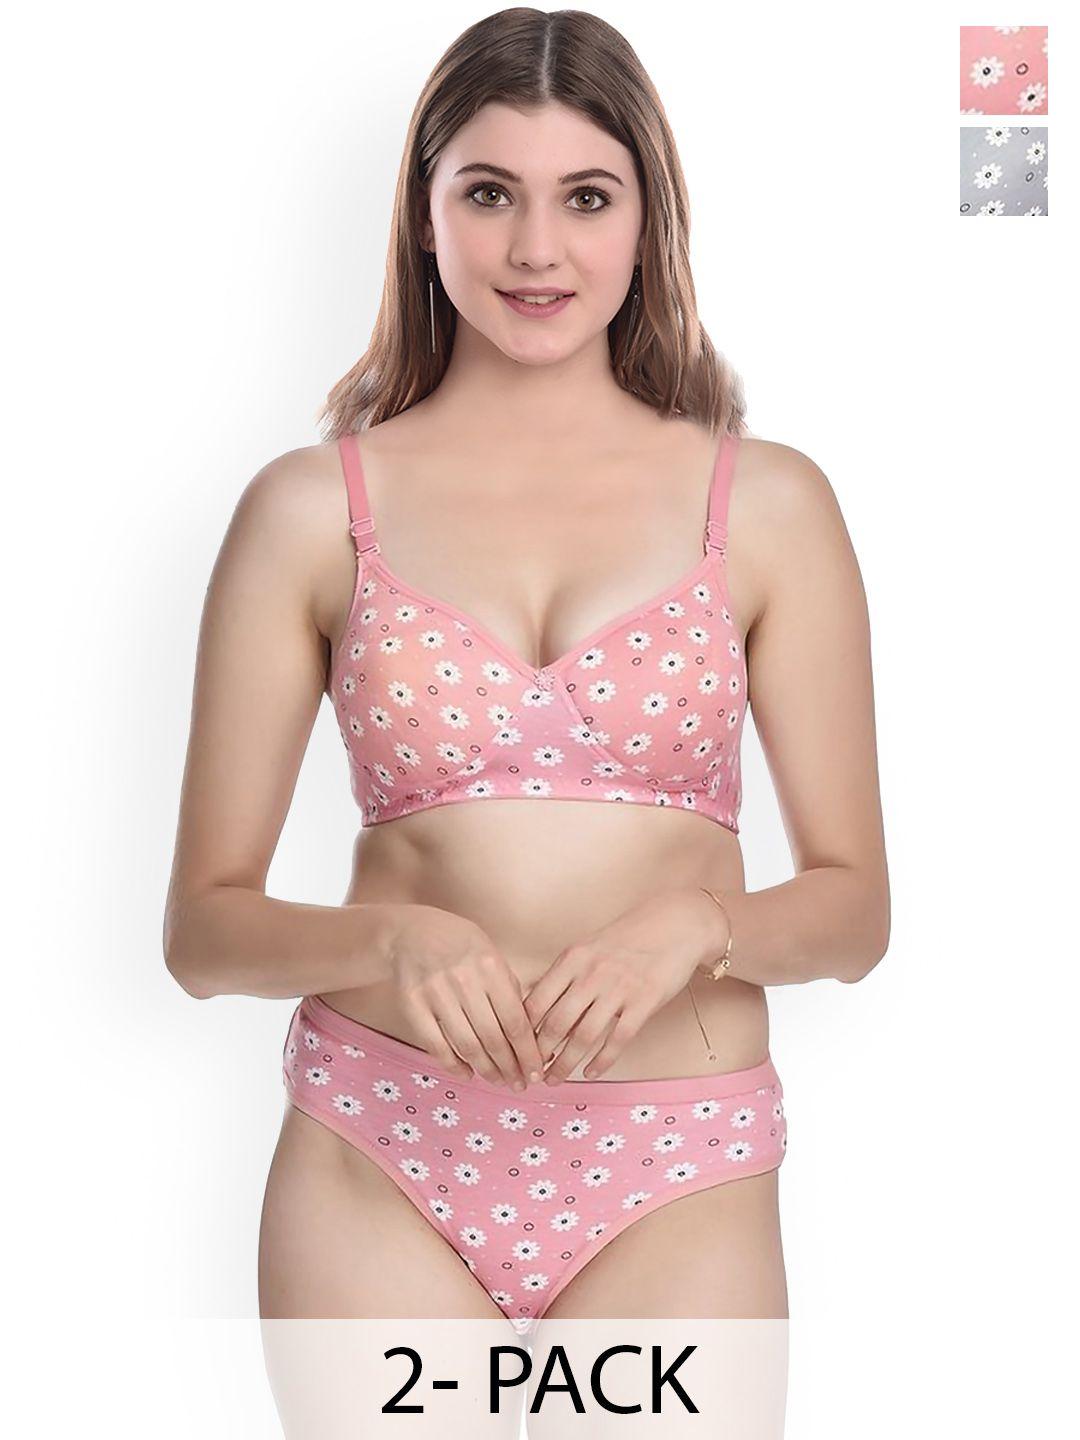 aamarsh pack of 2 printed cotton lingerie set a_dina set_pink,grey